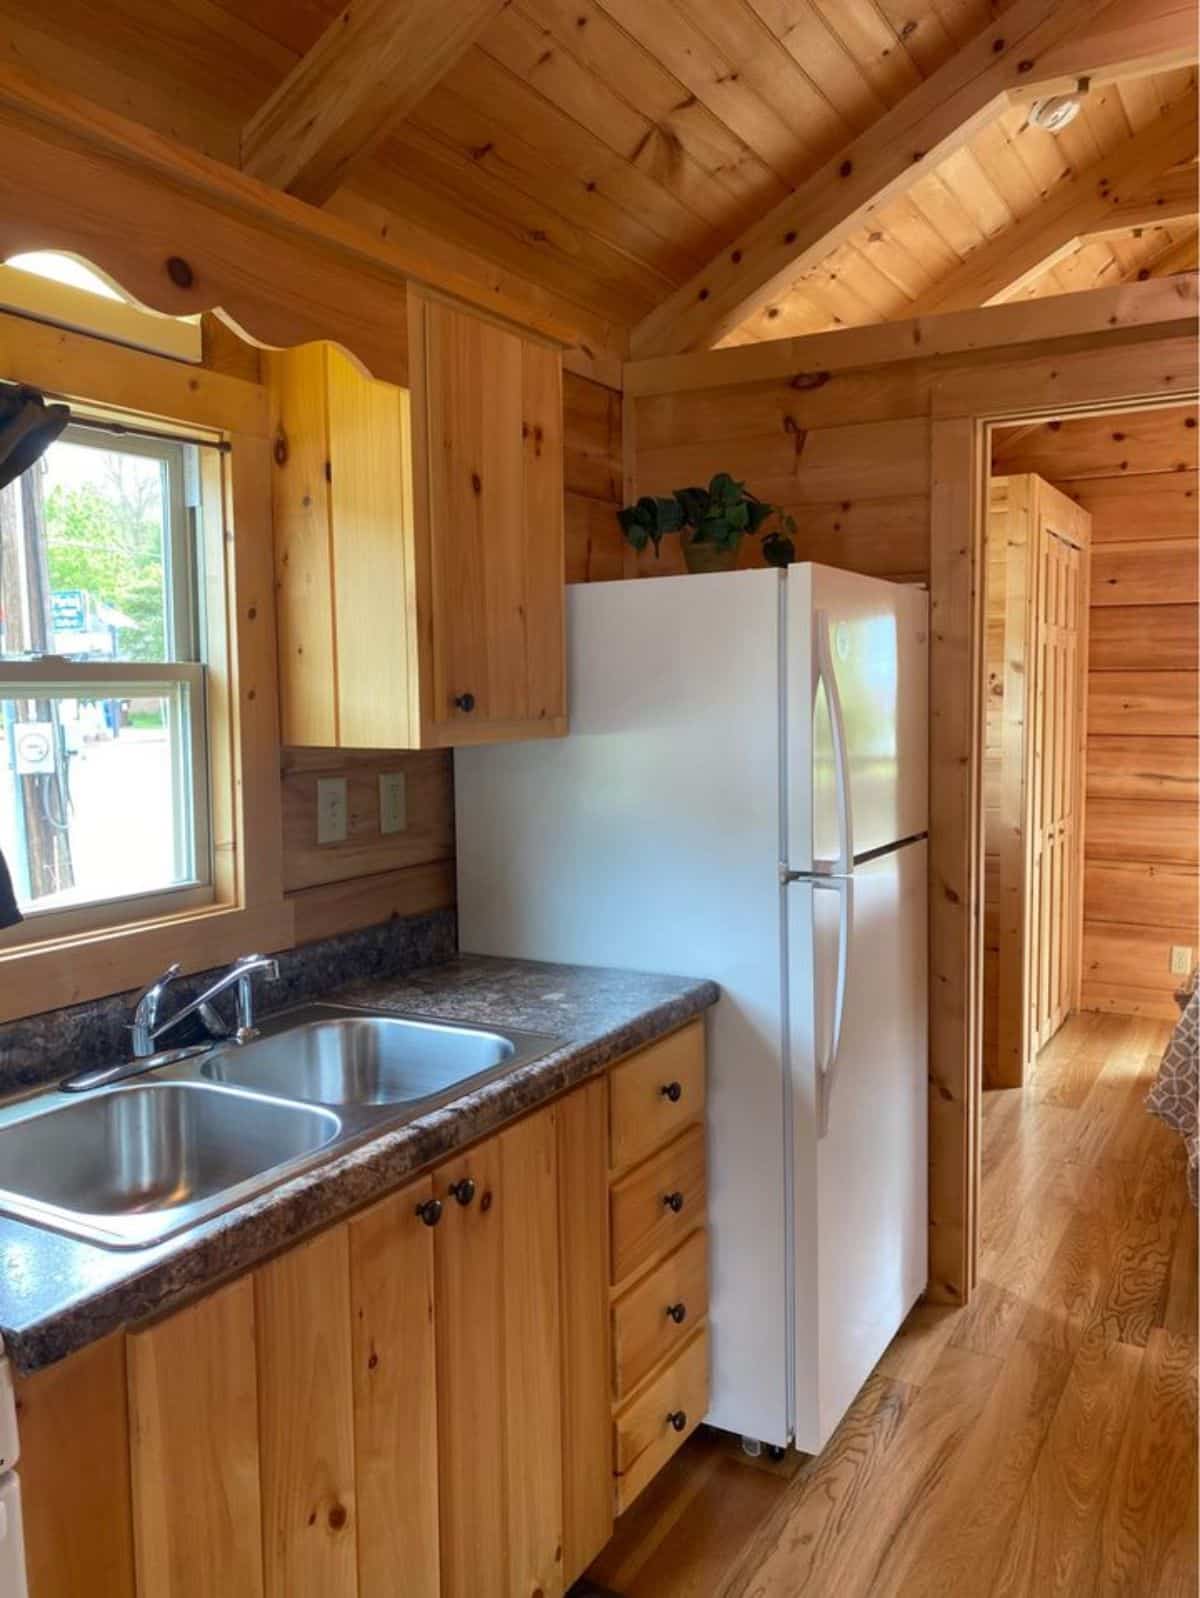 double door refrigerator in the kitchen area of custom built tiny home